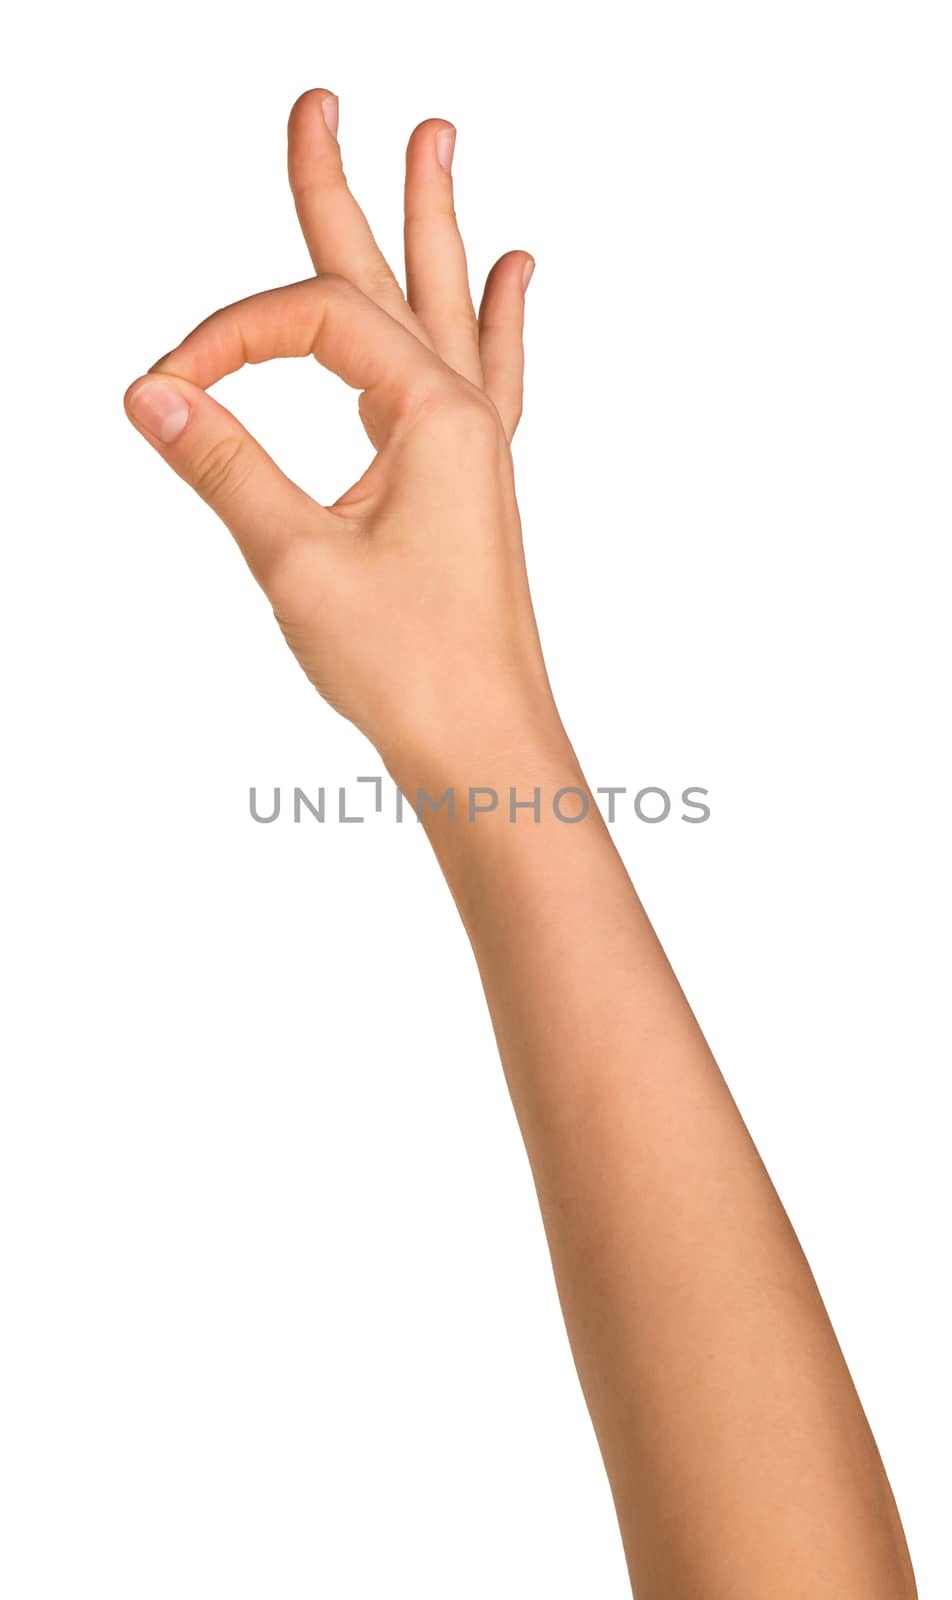 Hand OK sign isolated on white background